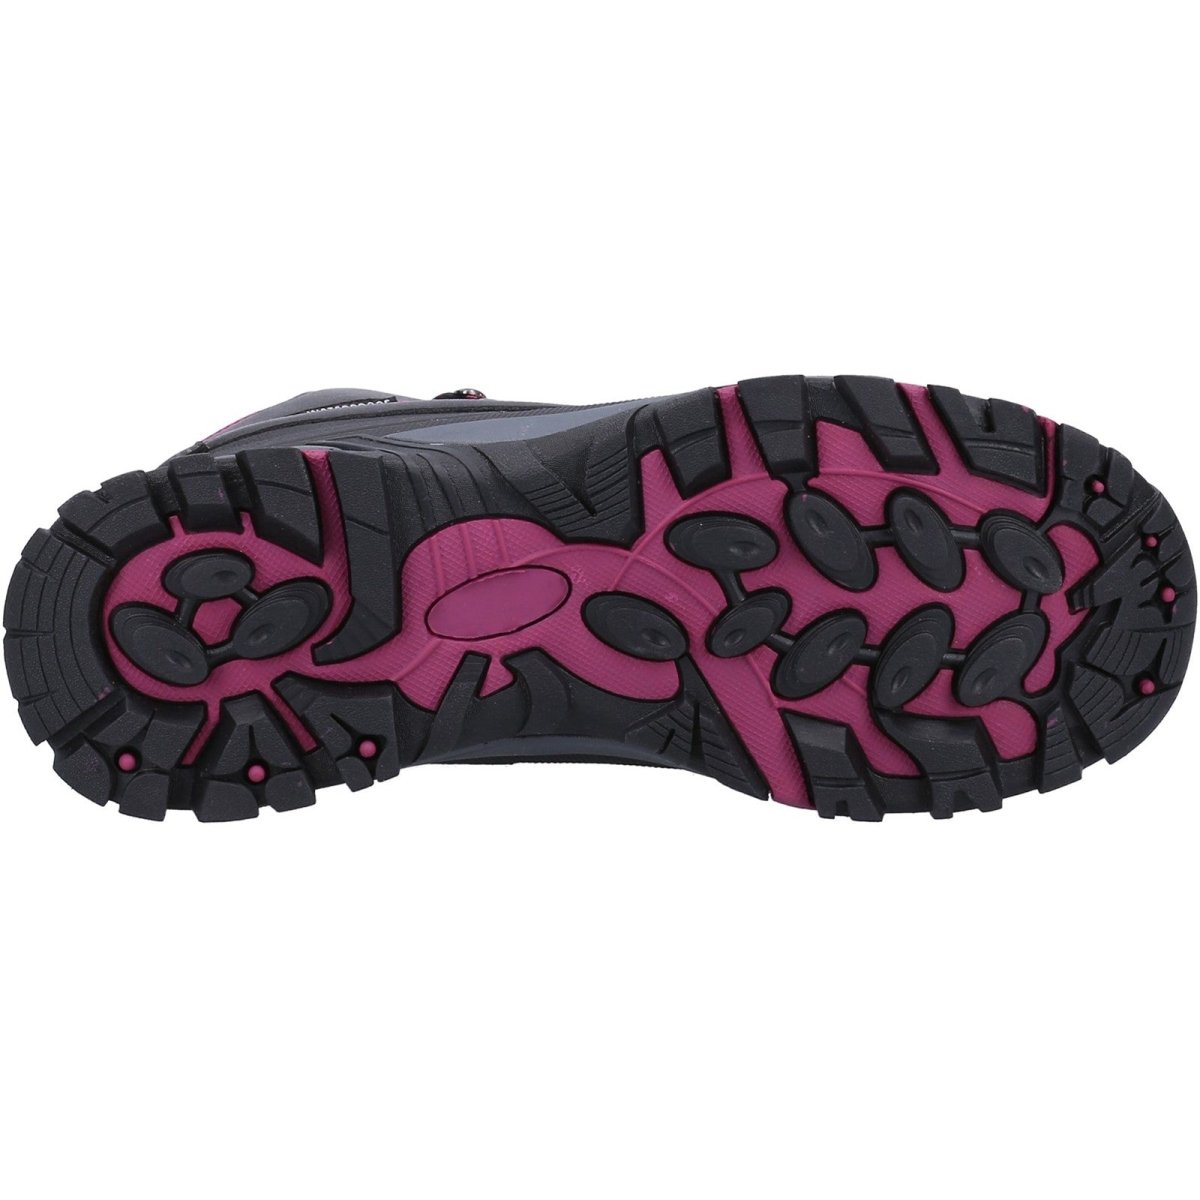 Cotswold Calmsden Ladies Lightweight Waterproof Hiking Boots - Shoe Store Direct